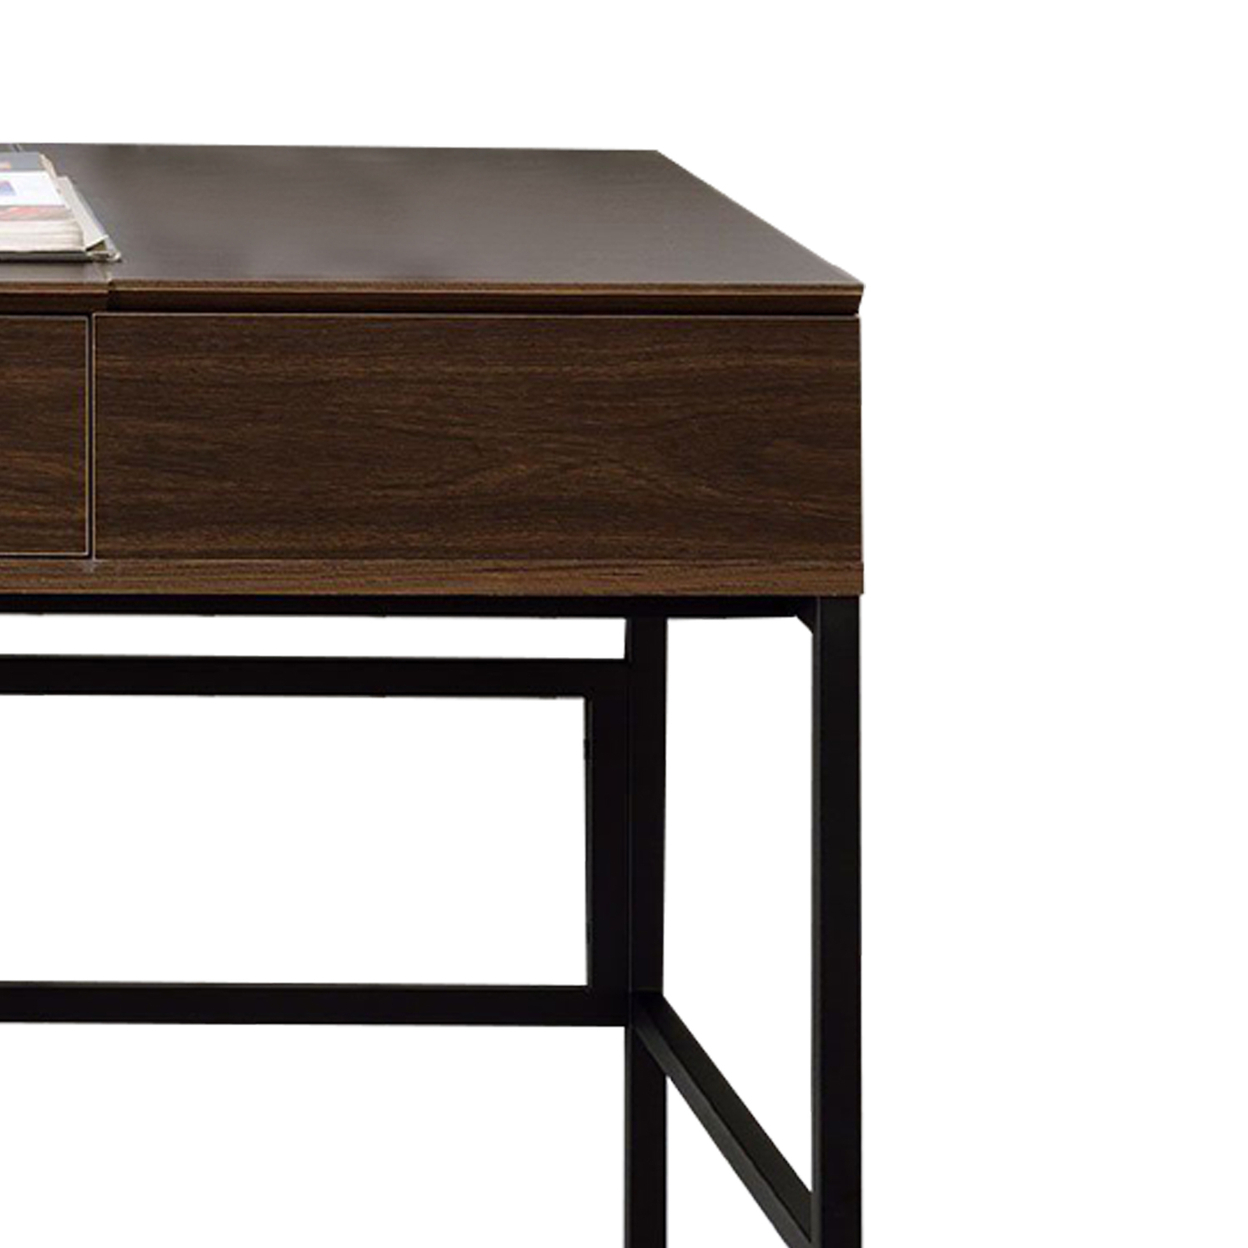 Writing Desk With Lift Top Storage And USB Plugin, Brown- Saltoro Sherpi